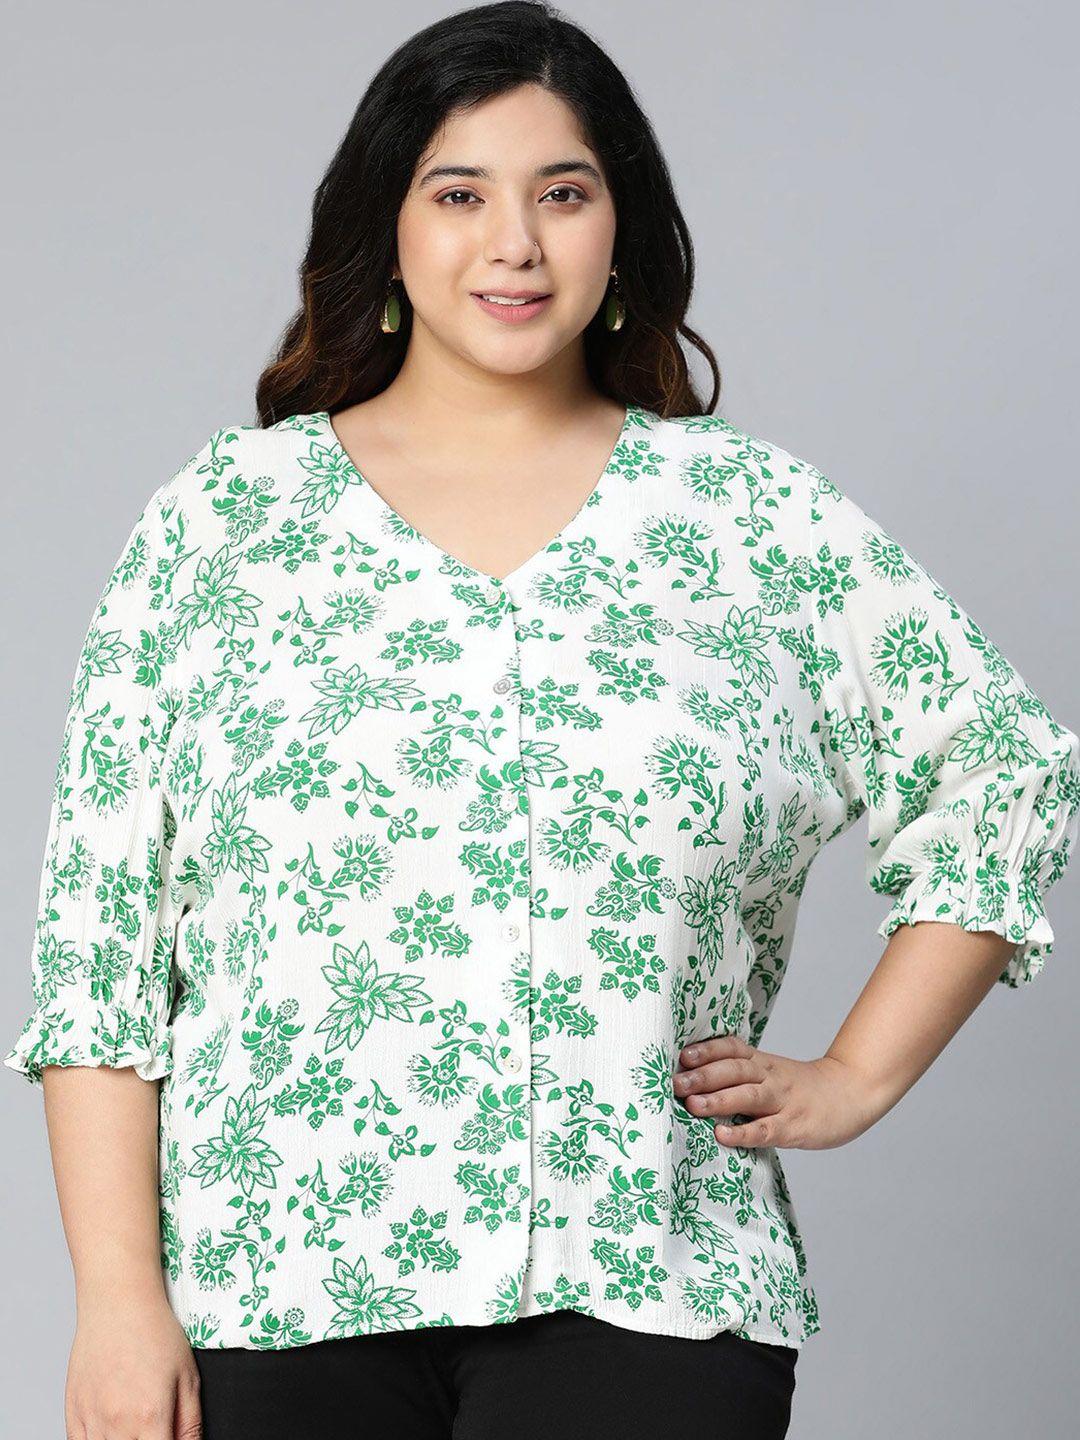 oxolloxo-plus-size-women-green-&-white-floral-print-crepe-top